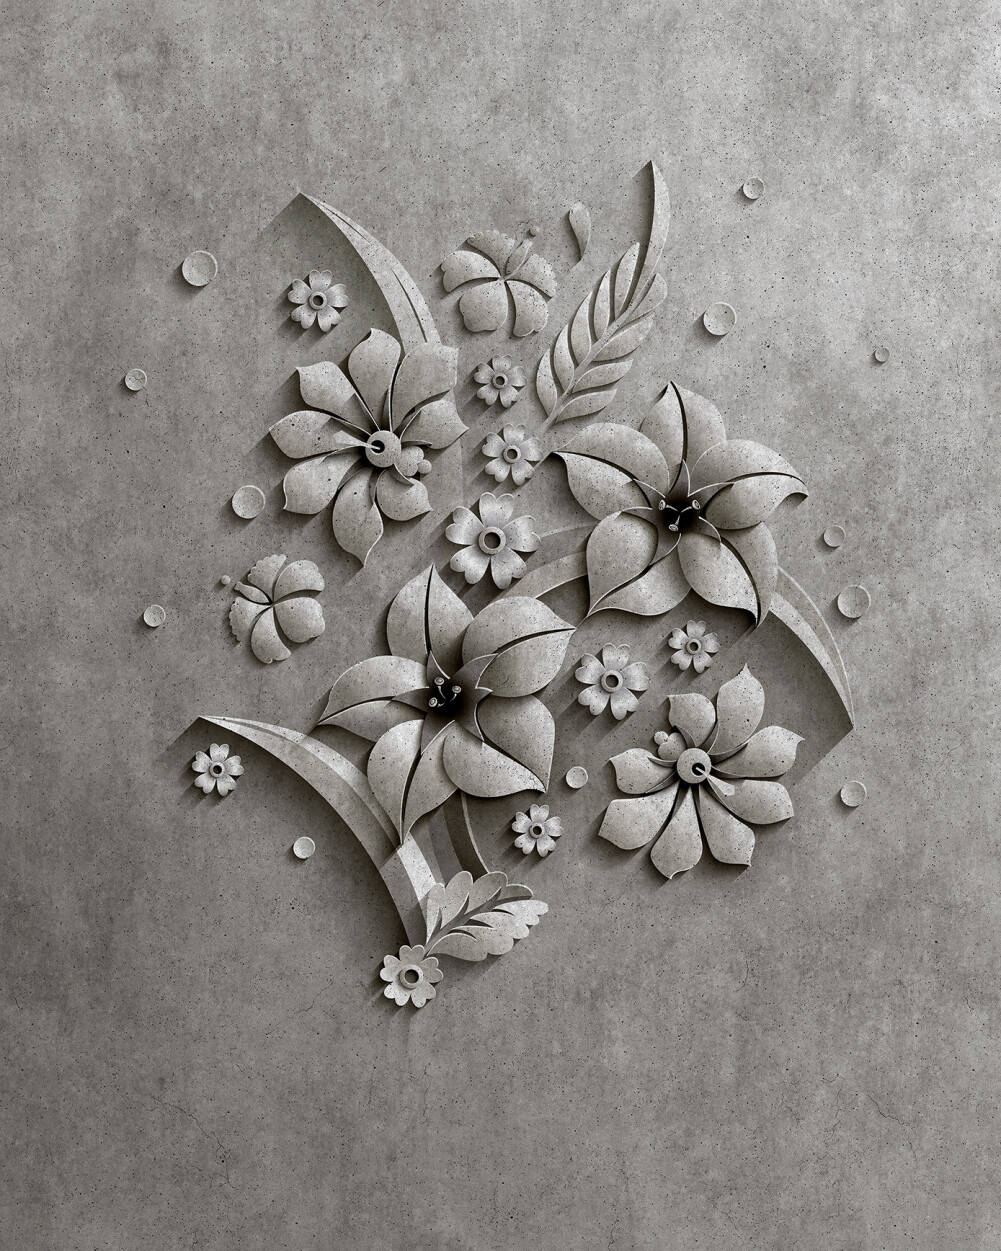 Erleichterungblumen Grau Wallpaper